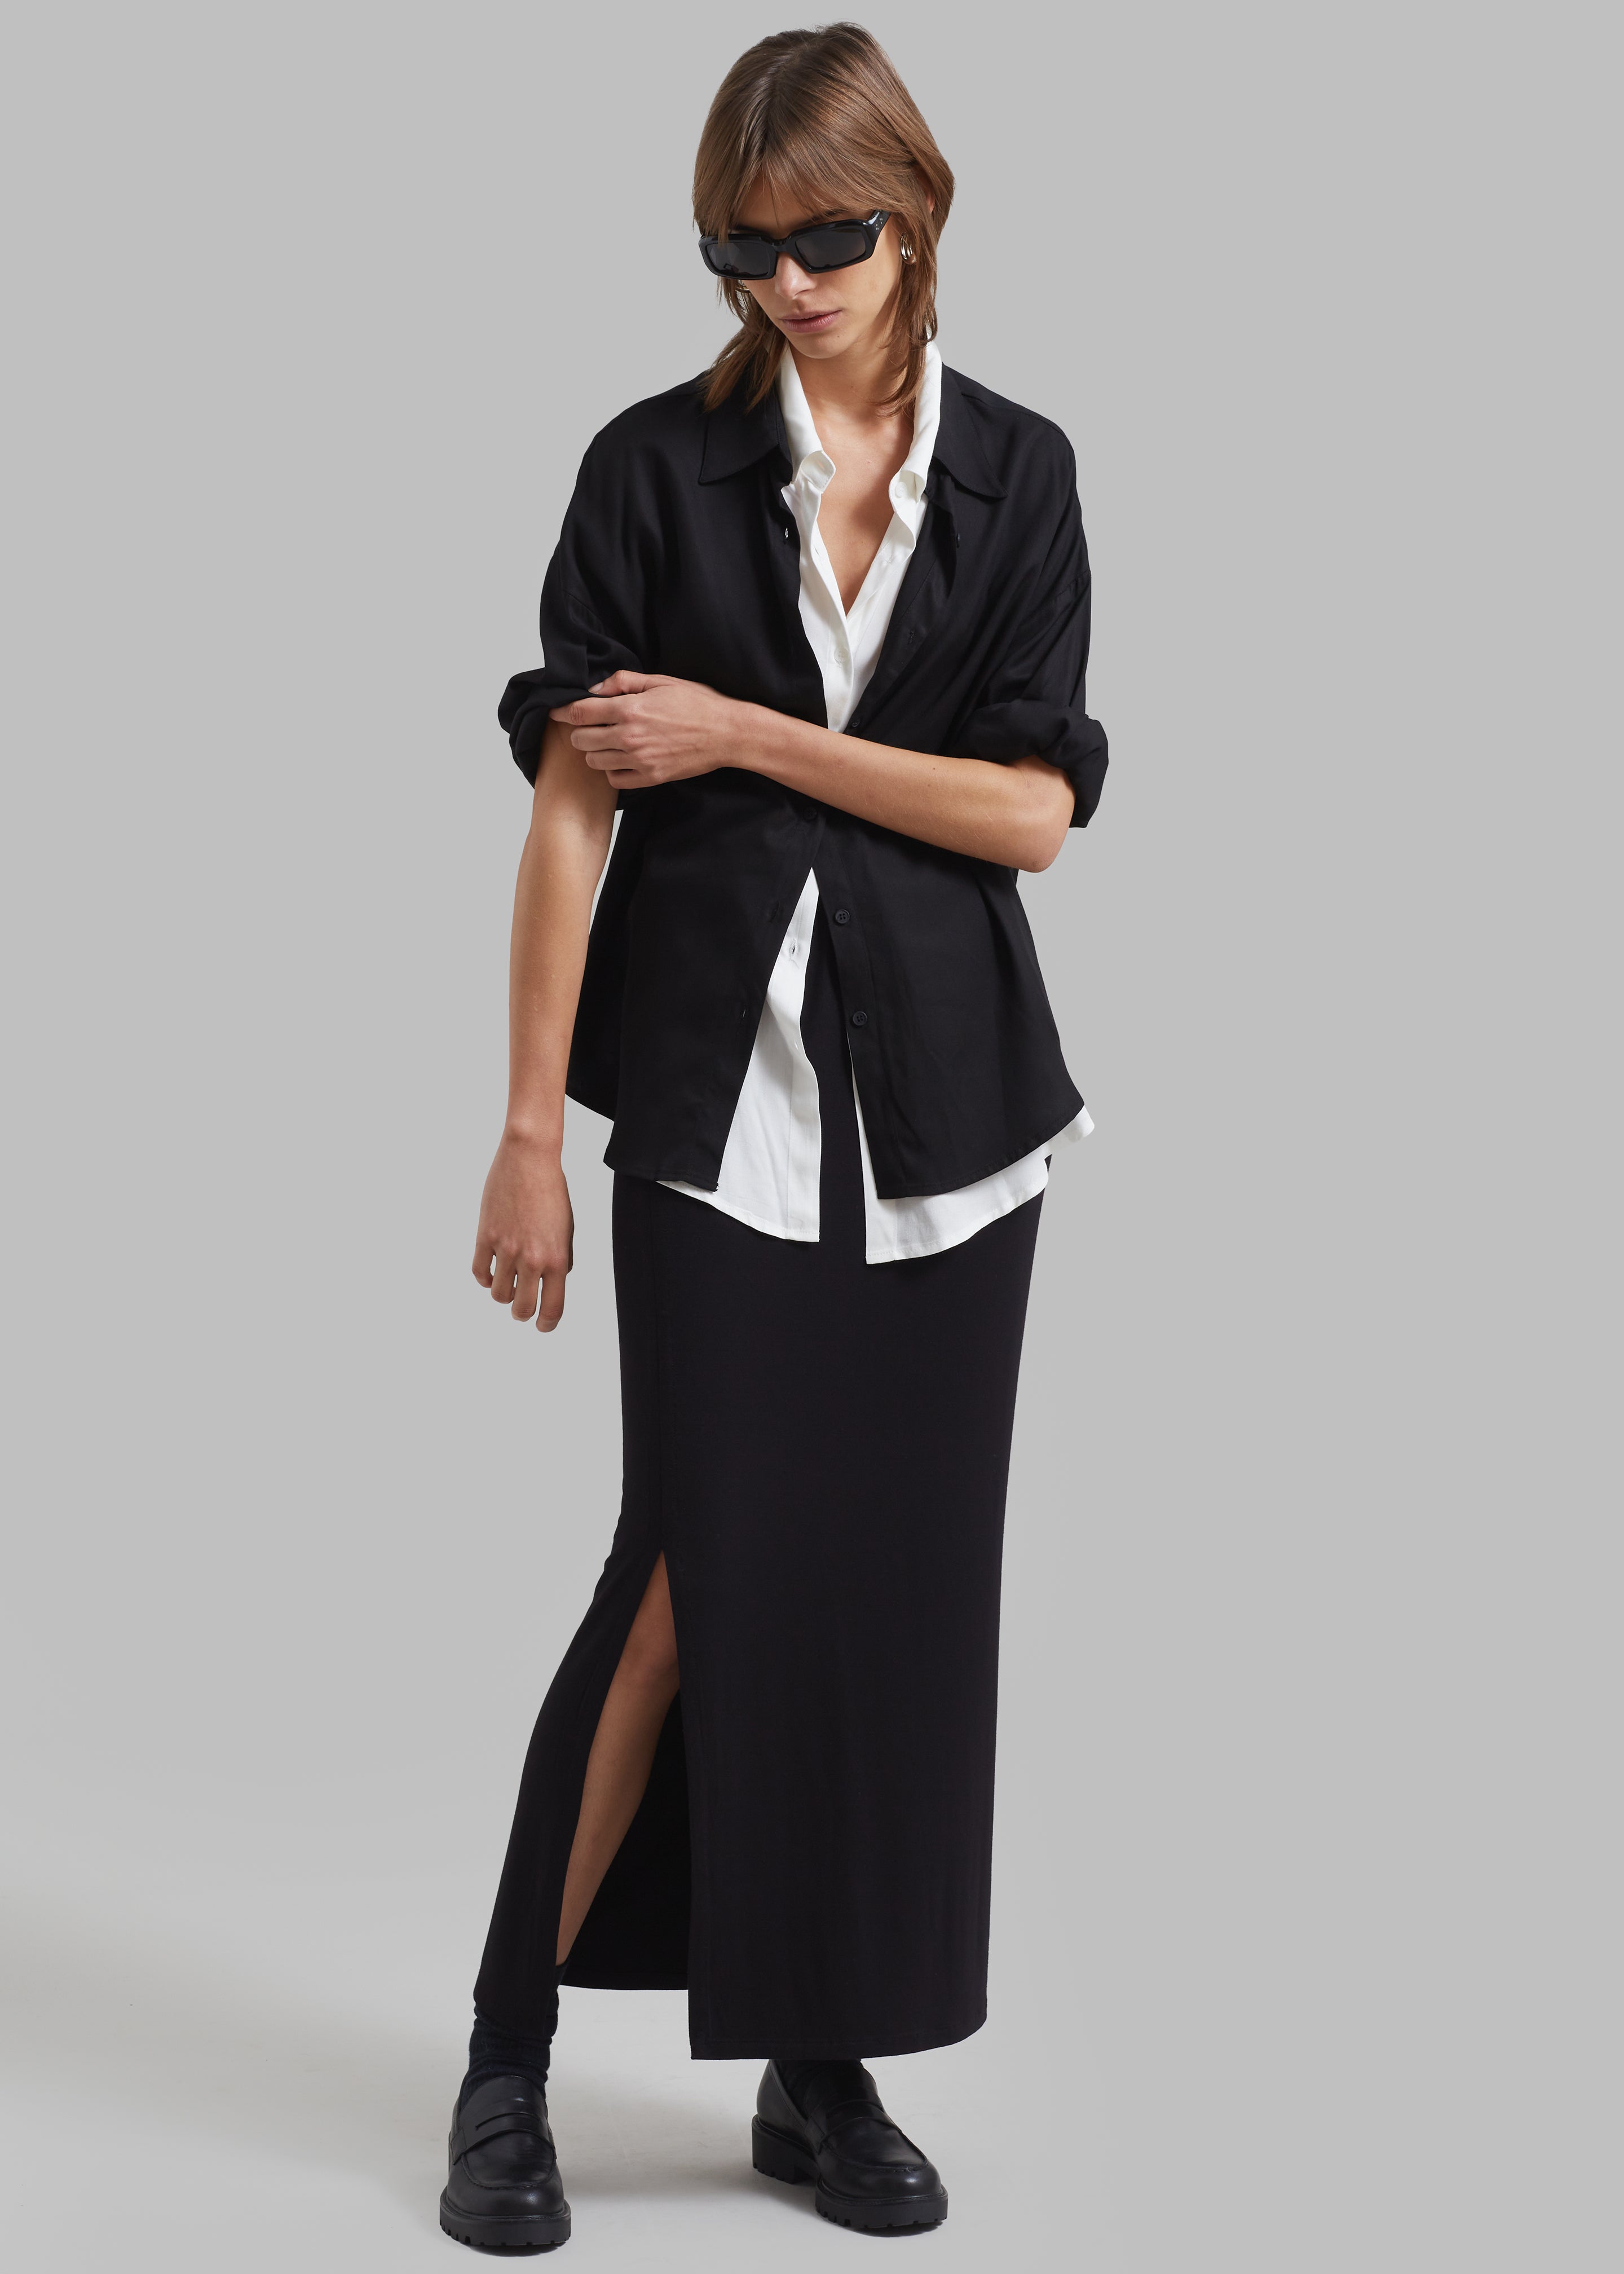 Ann Double Layer Shirt - Black/White - 2